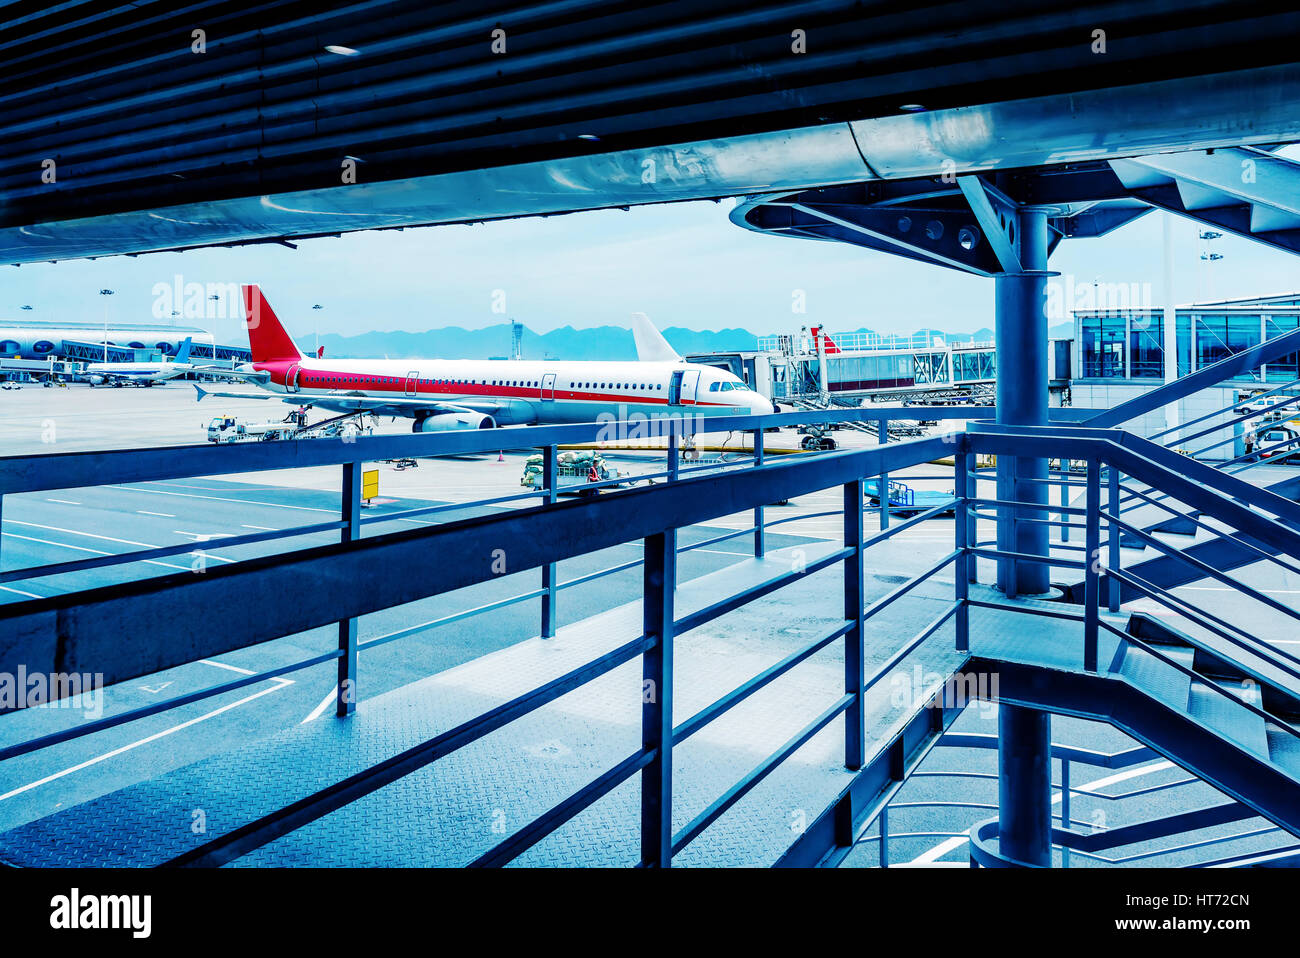 Shanghai Pudong International Airport en vliegtuigen imbarco bruggen Foto Stock